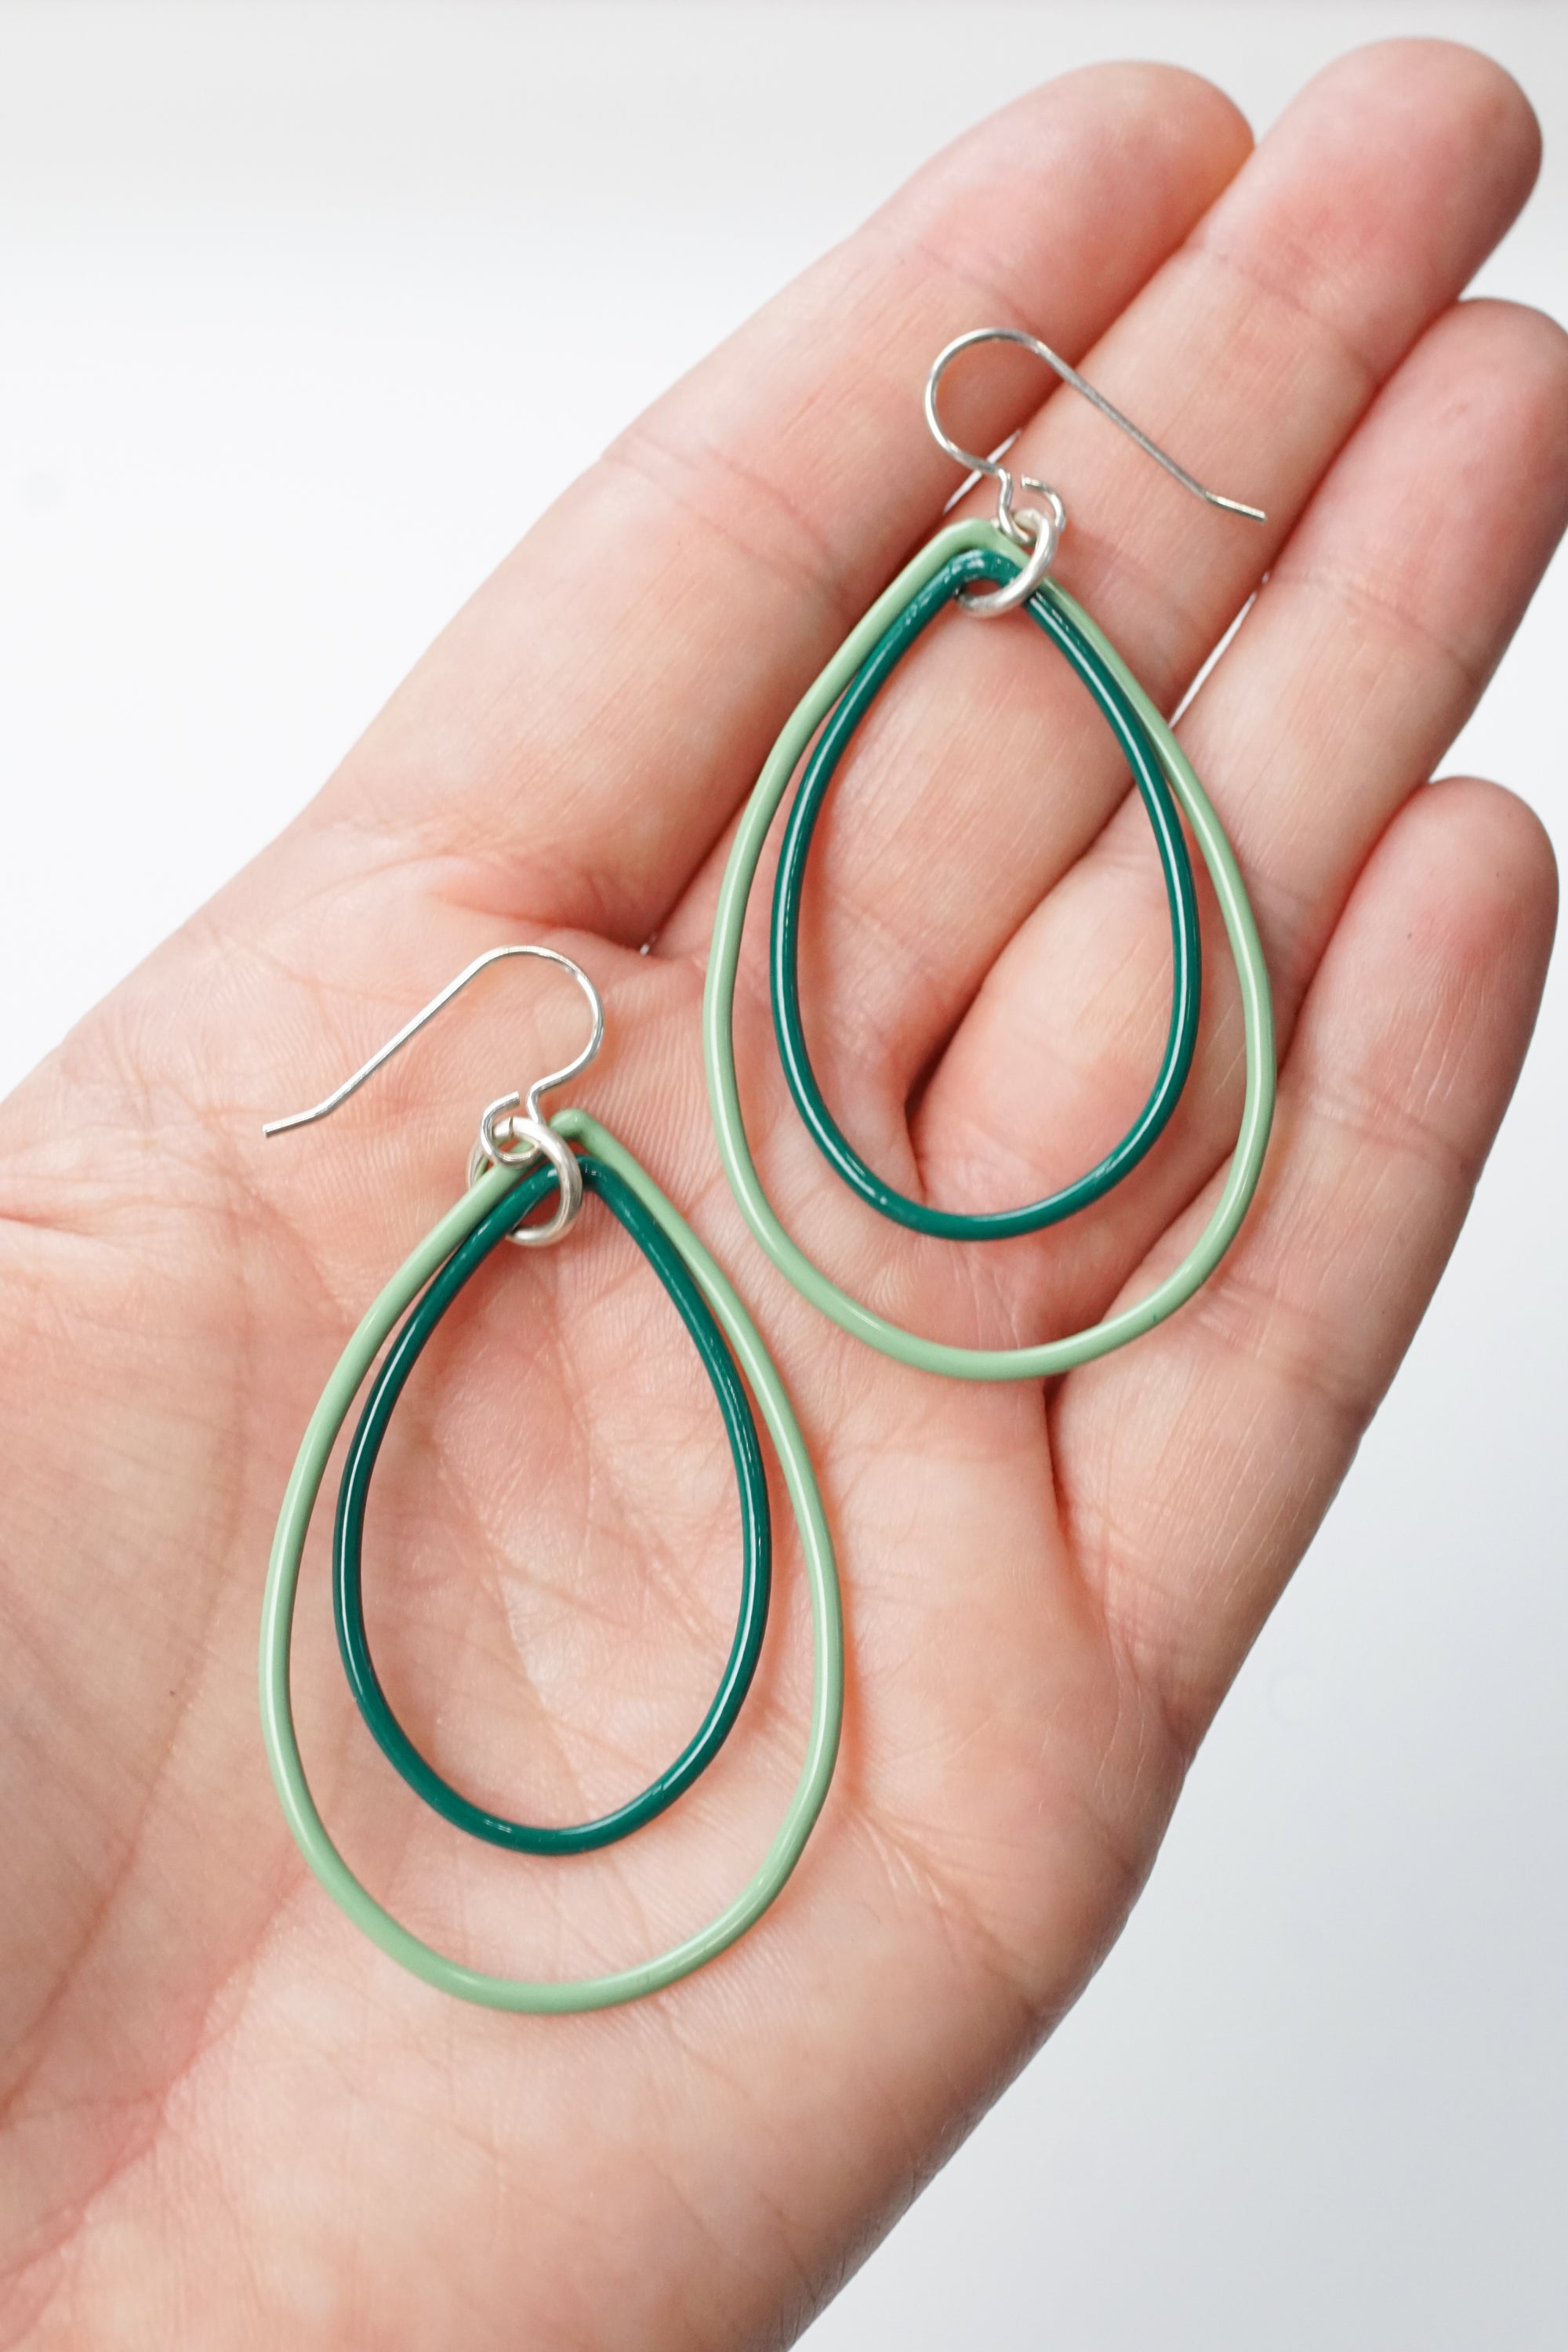 Eva earrings in Pale Green and Emerald Green